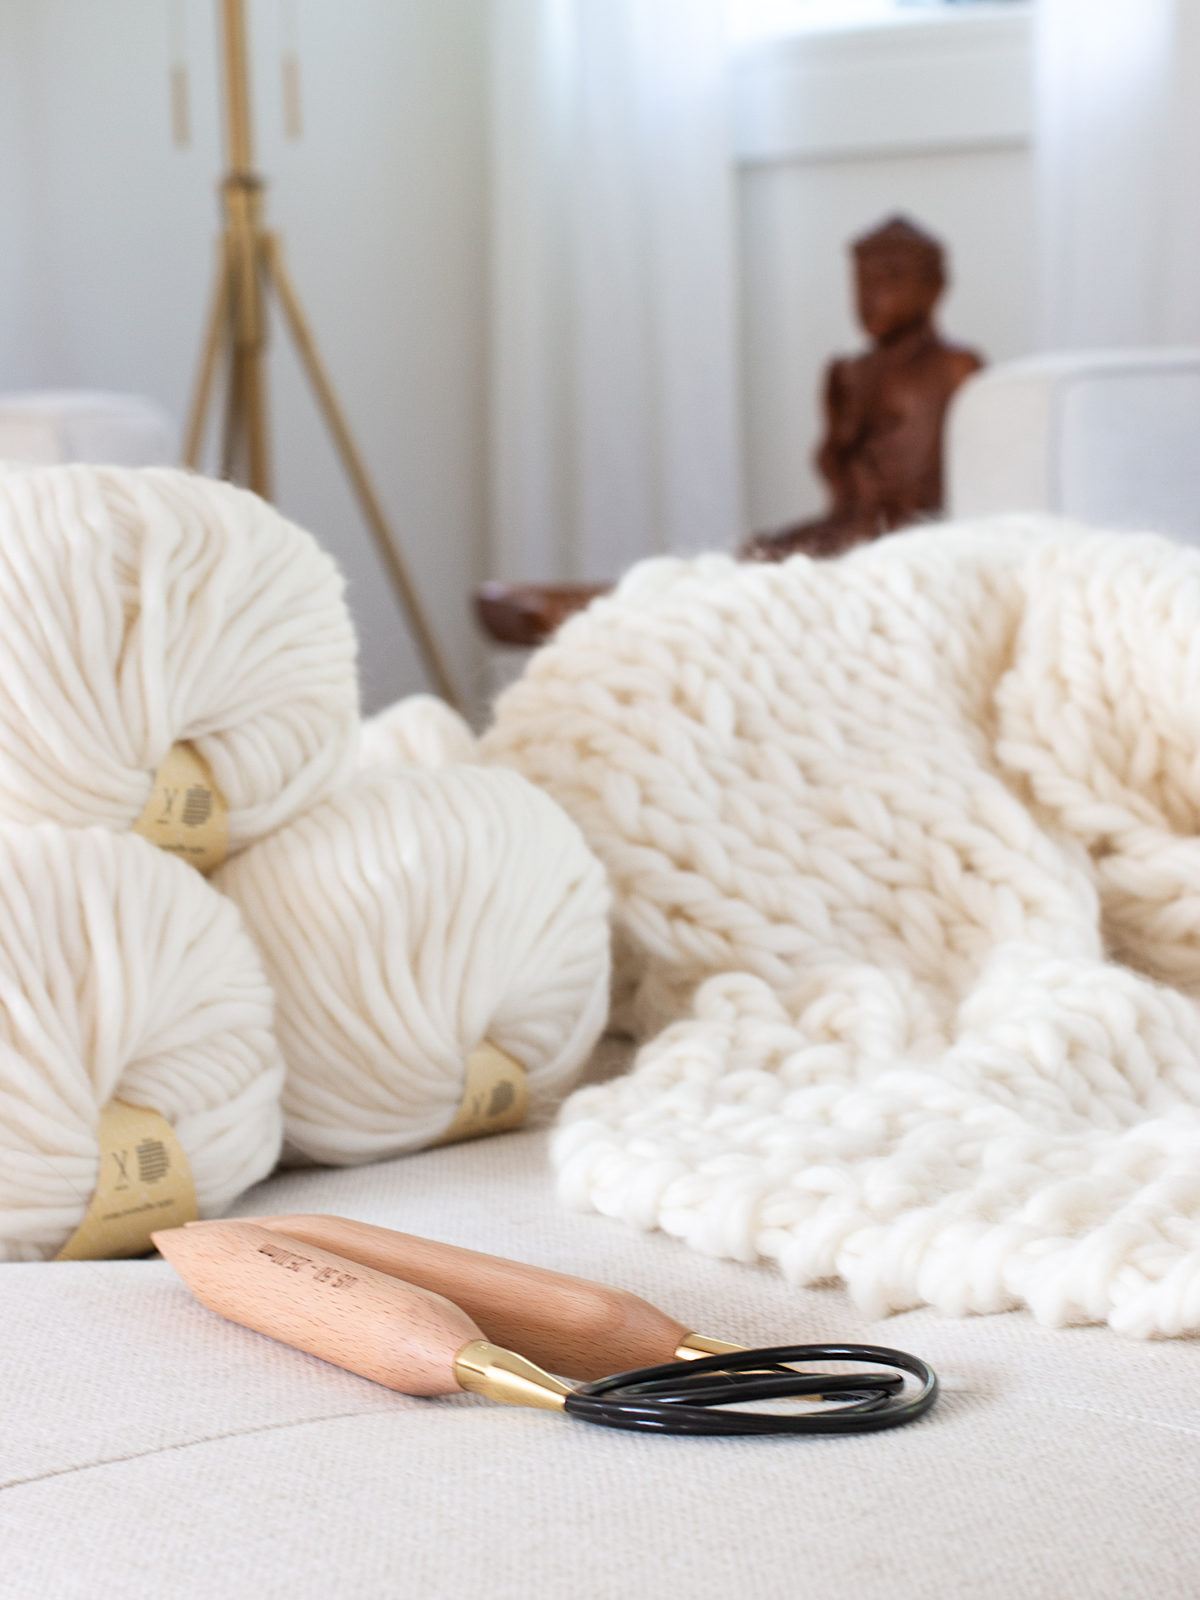 FREE chunky knit blanket pattern. Knit a blanket in a weekend! Easy